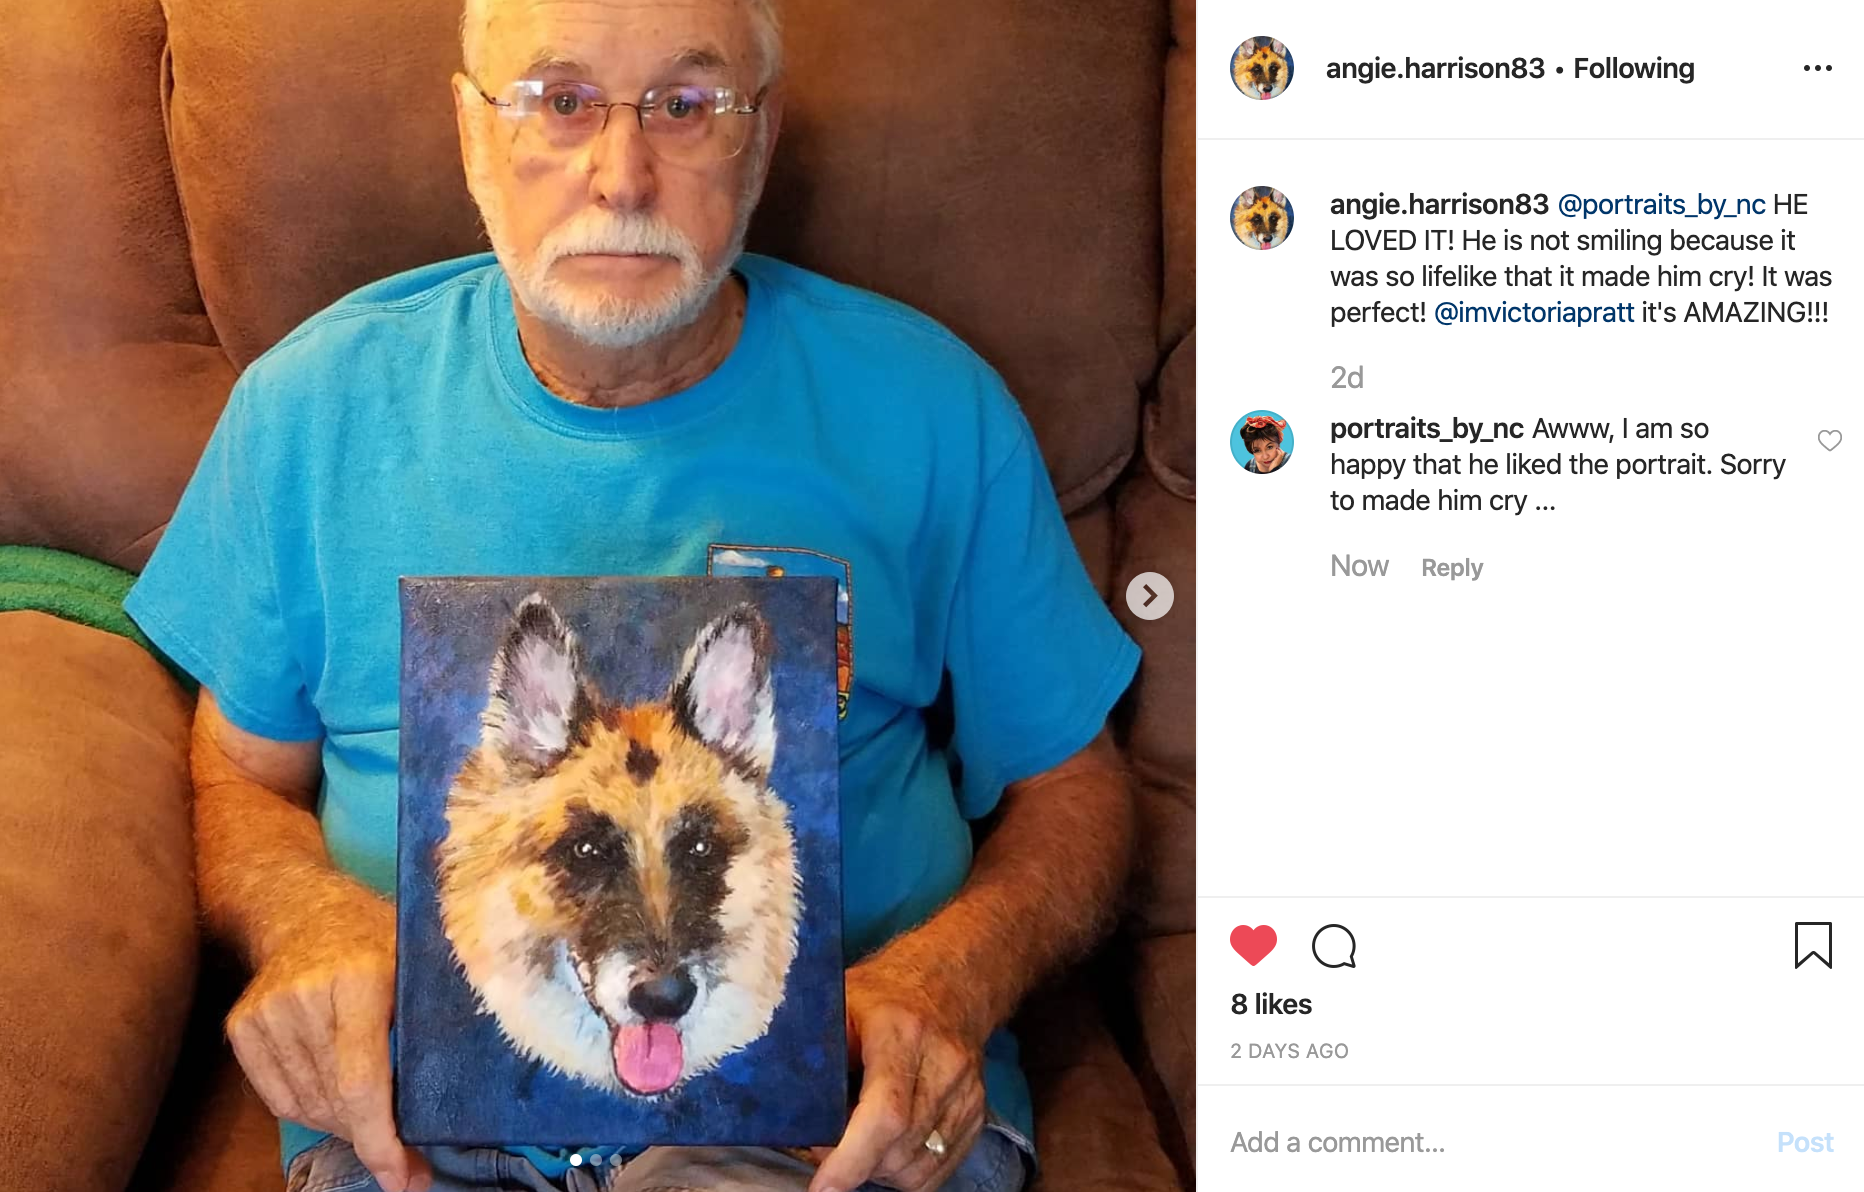 Customer with hs dog portrait